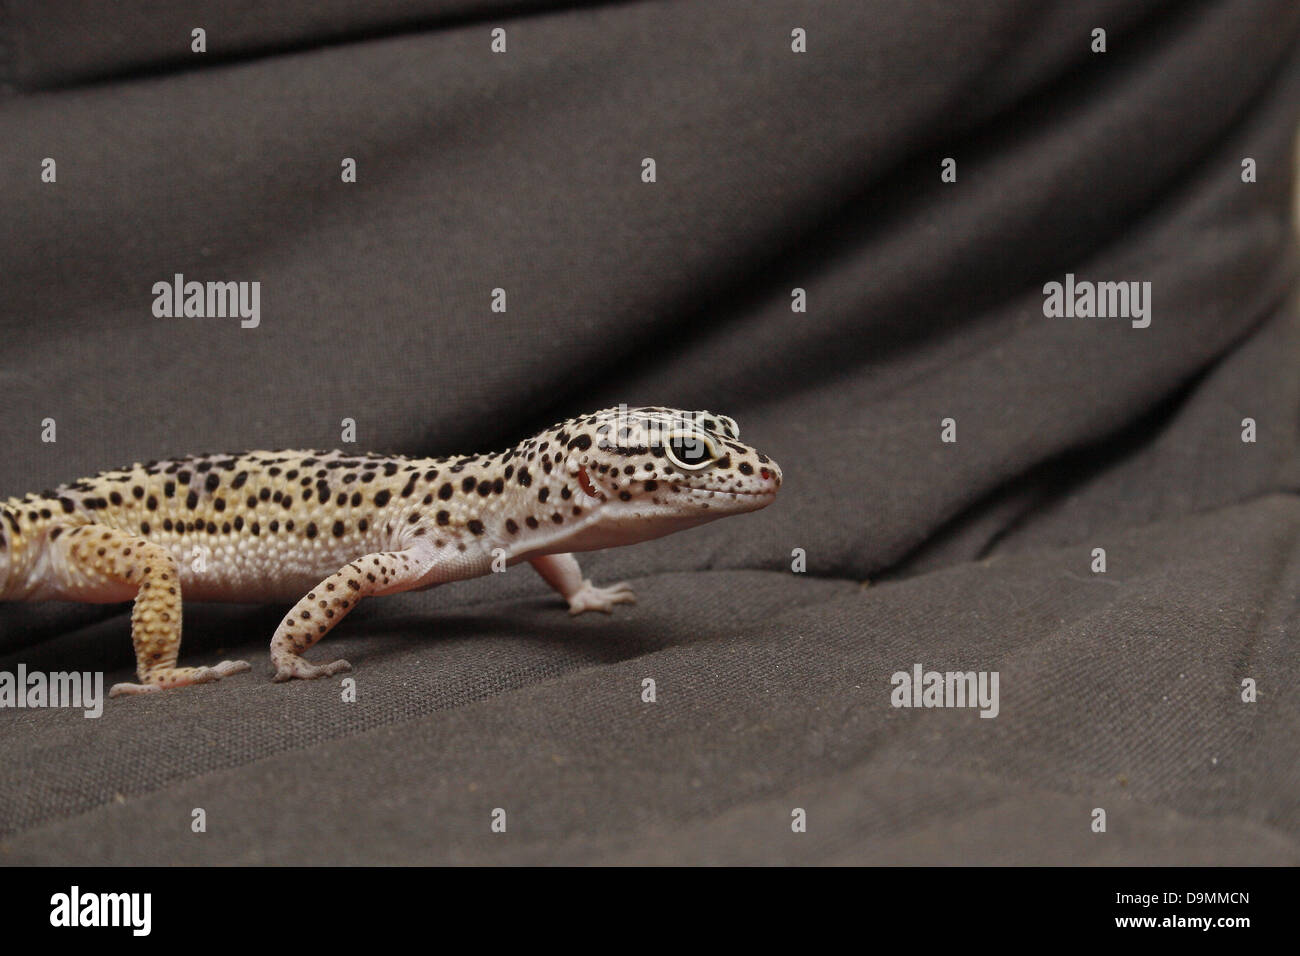 leopard gecko crawling on black fabric Eublepharis macularius Stock Photo